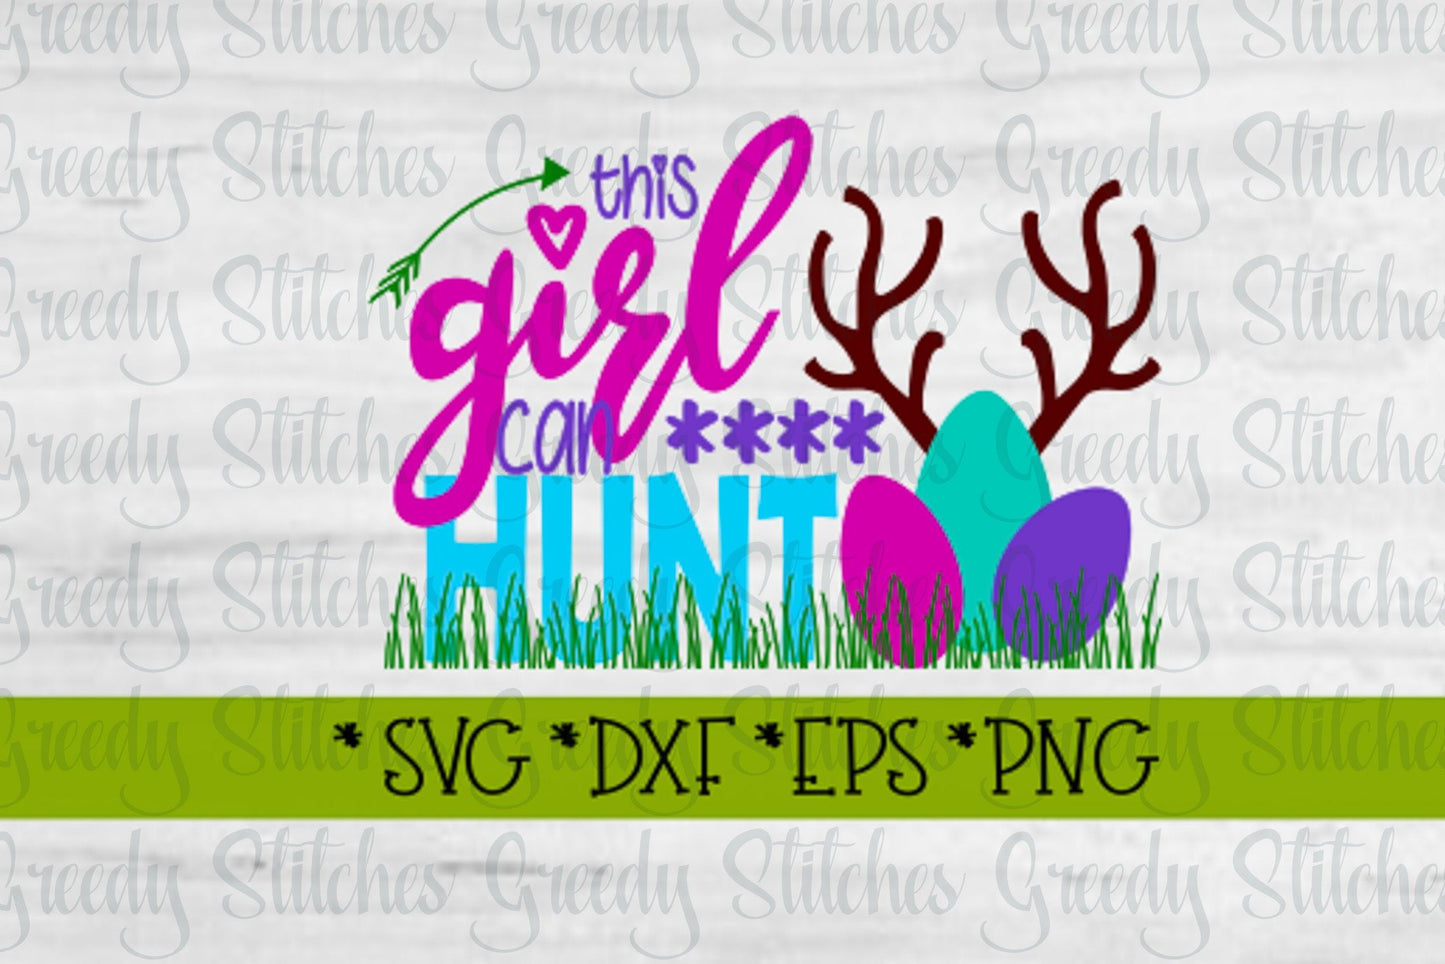 Easter SvG | This Girl Can Hunt svg, dxf, eps, png. Easter SvG | This Girl SvG | Hunt Eggs SvG | Easter Girl SvG | Instant Download Cut File